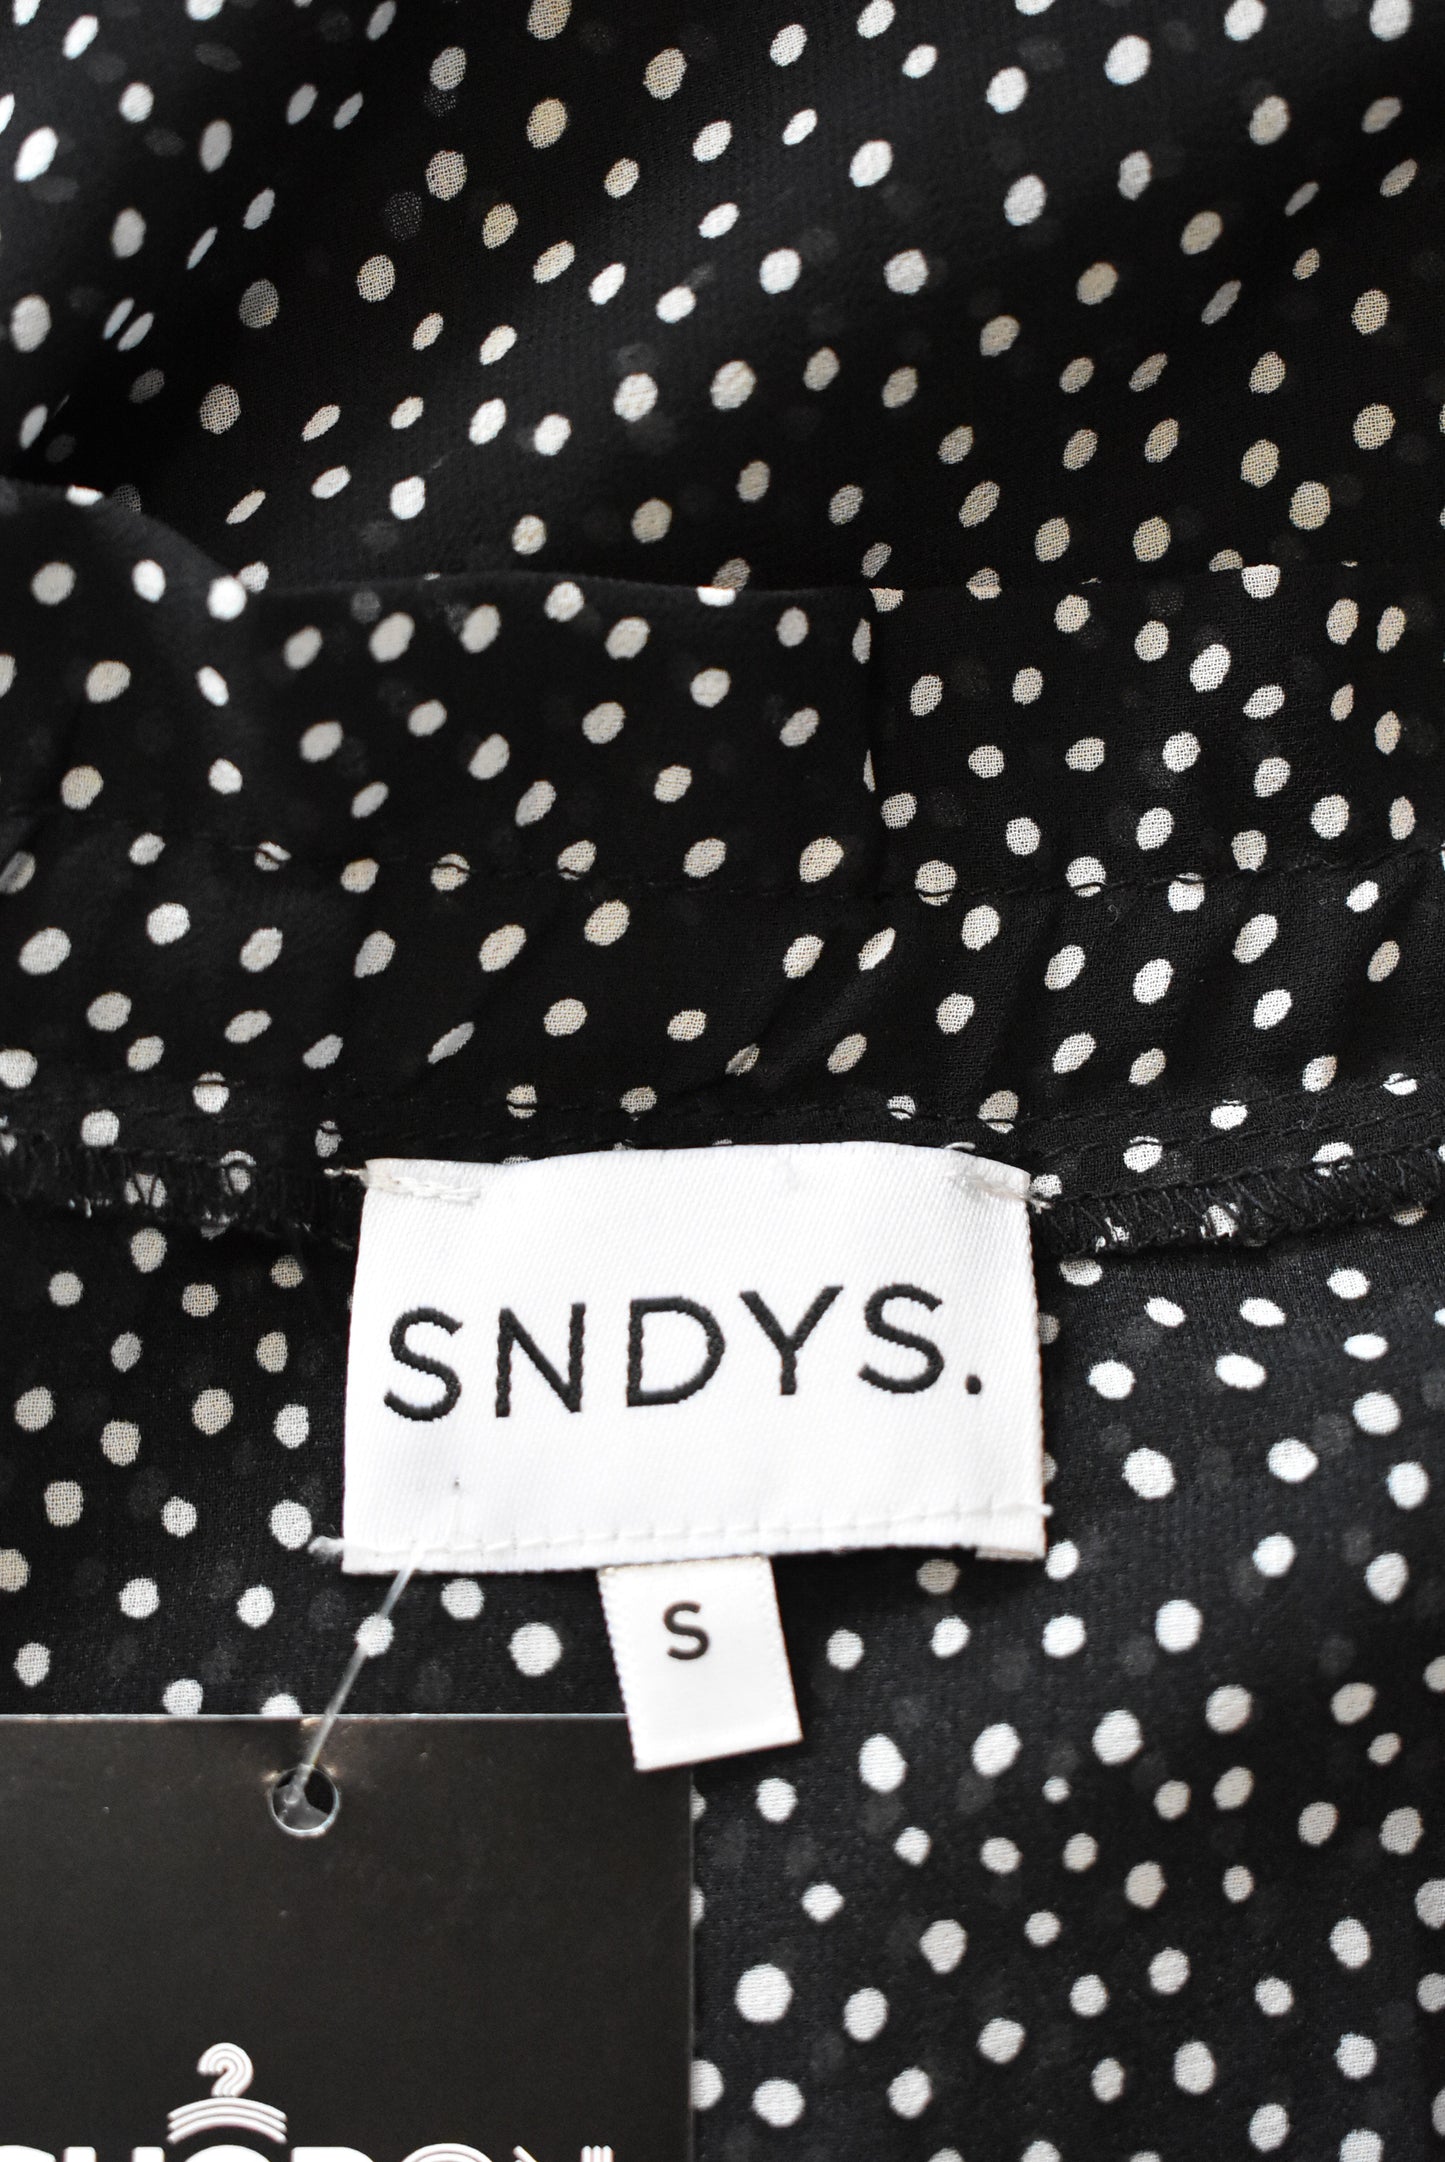 SNDYS long sleeve black and white polka dot dress, size s